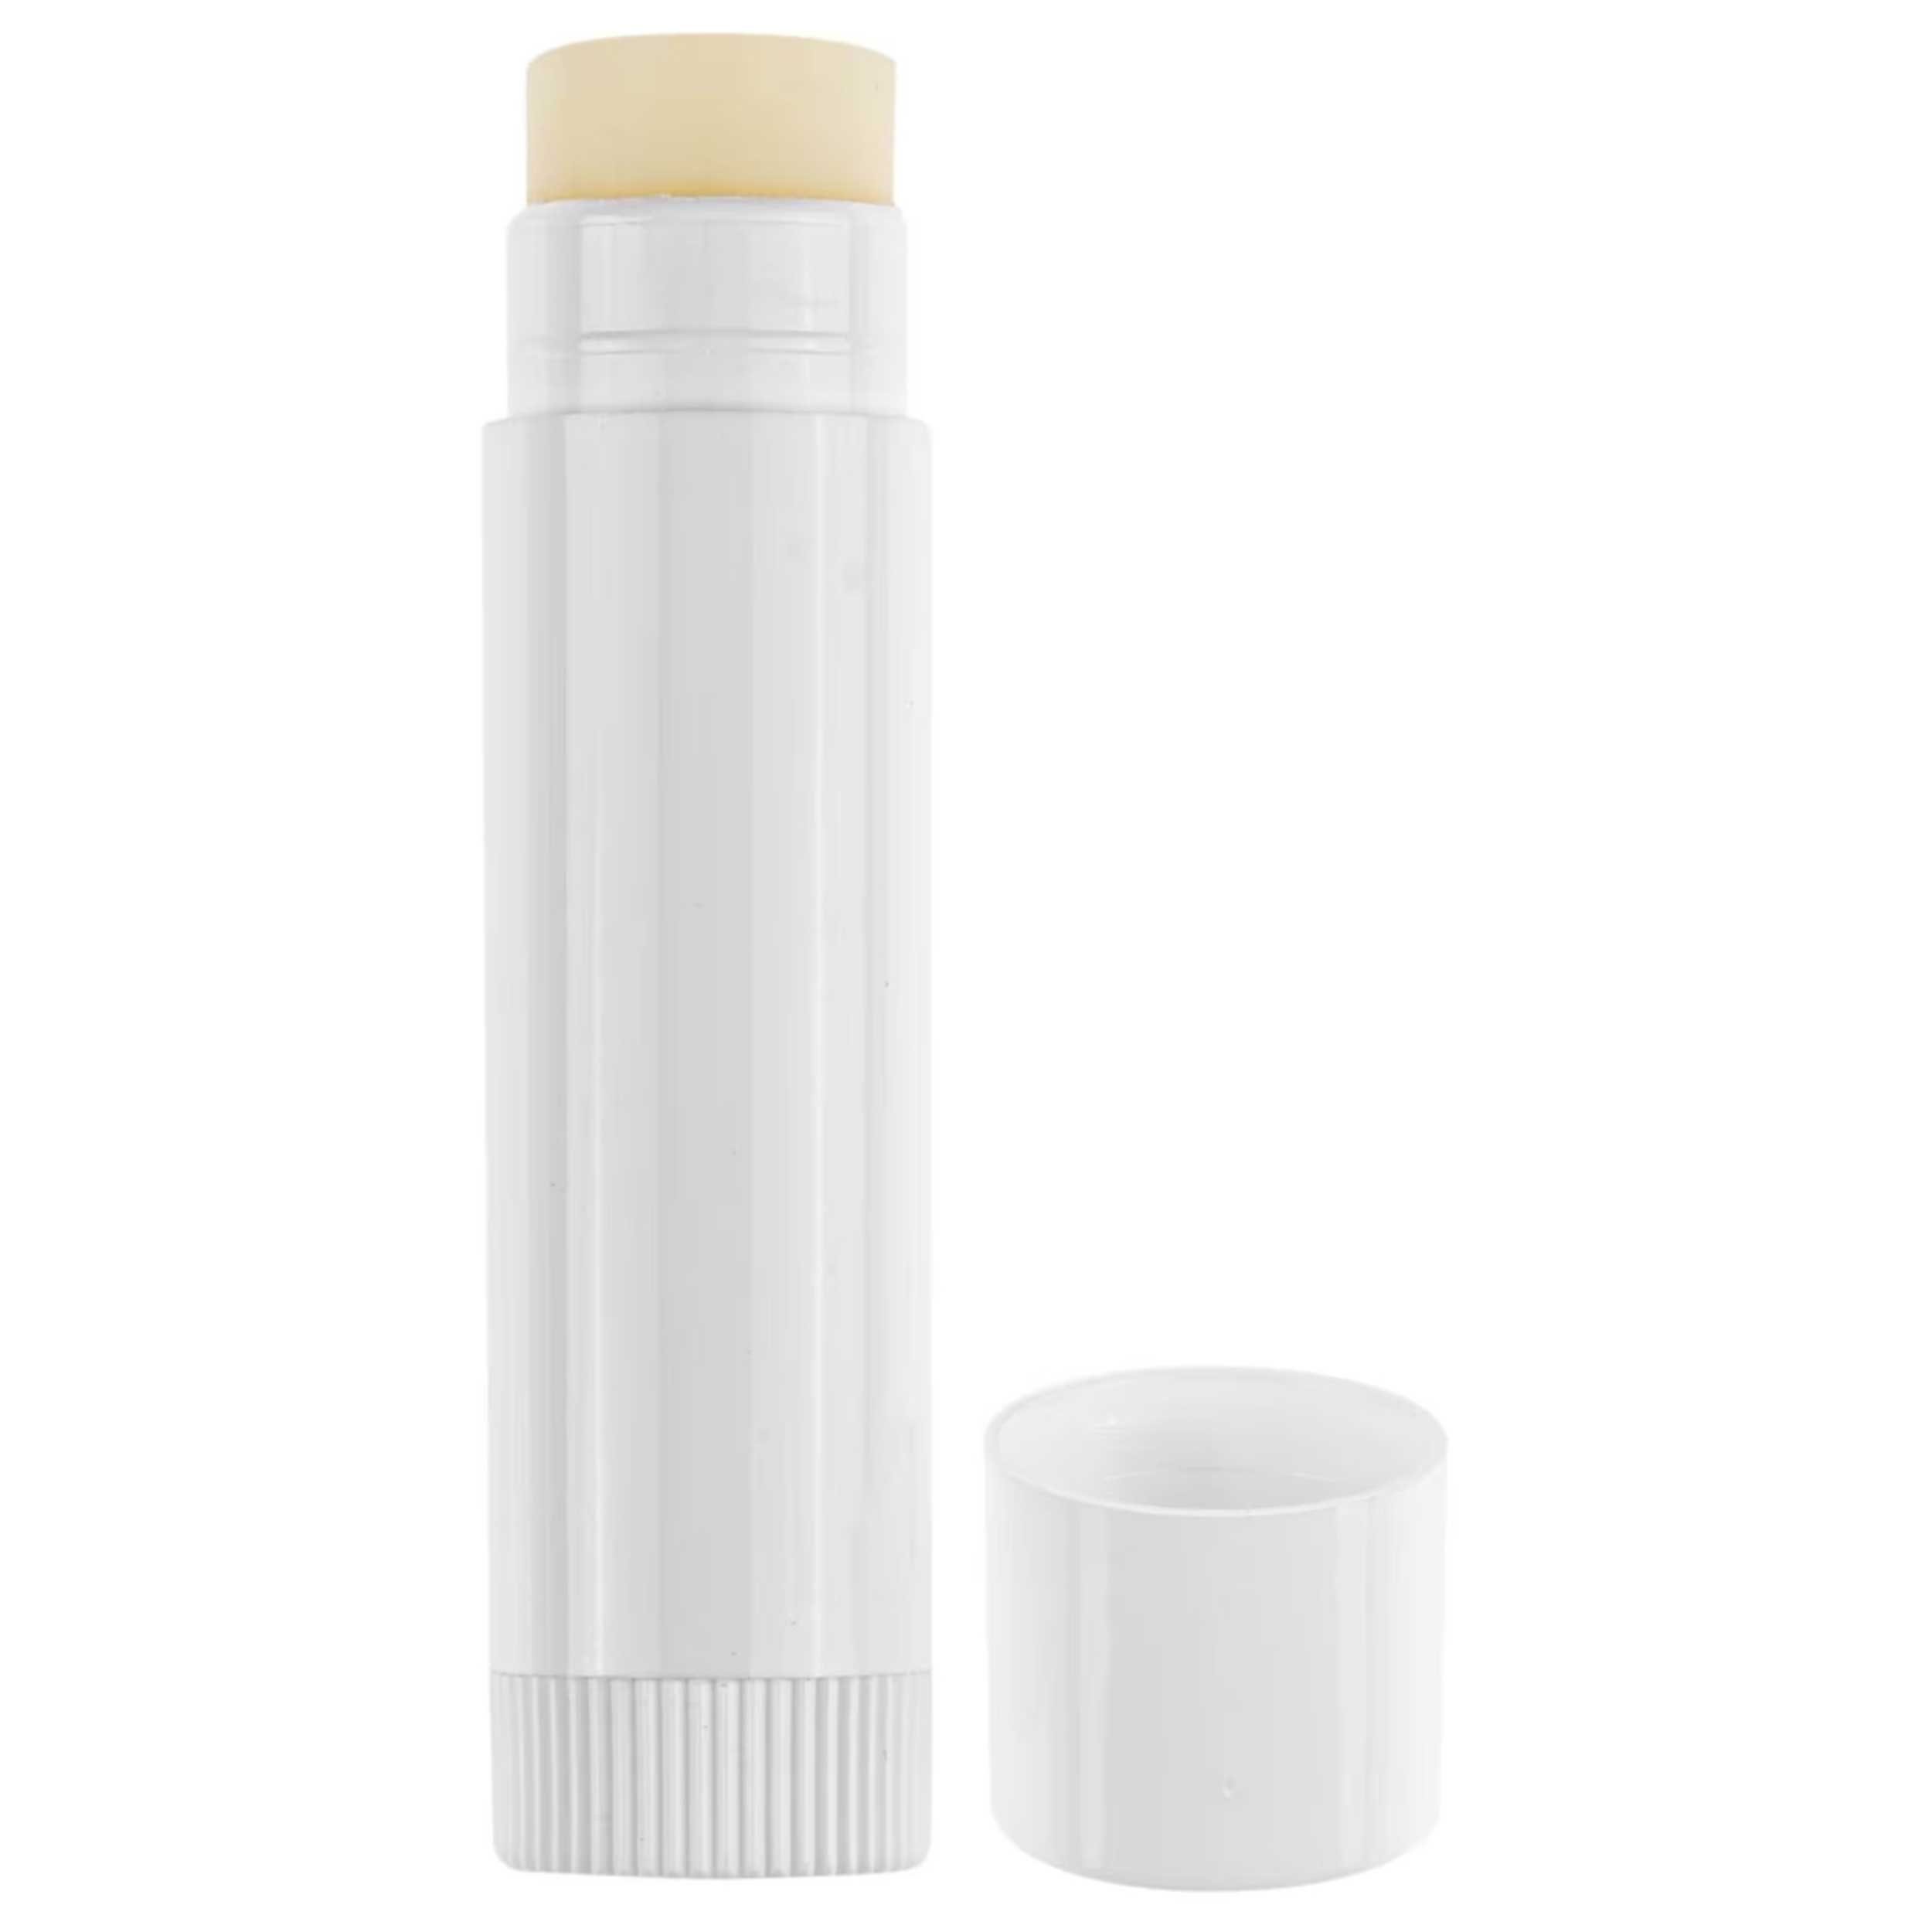 Malantis Lippenpflegemittel Hülsen leer DIY zum selber machen Drehstift Tubes Lippenpflegestift, 50-tlg., leer, ohne Füllung, Do-it-yourself, basteln